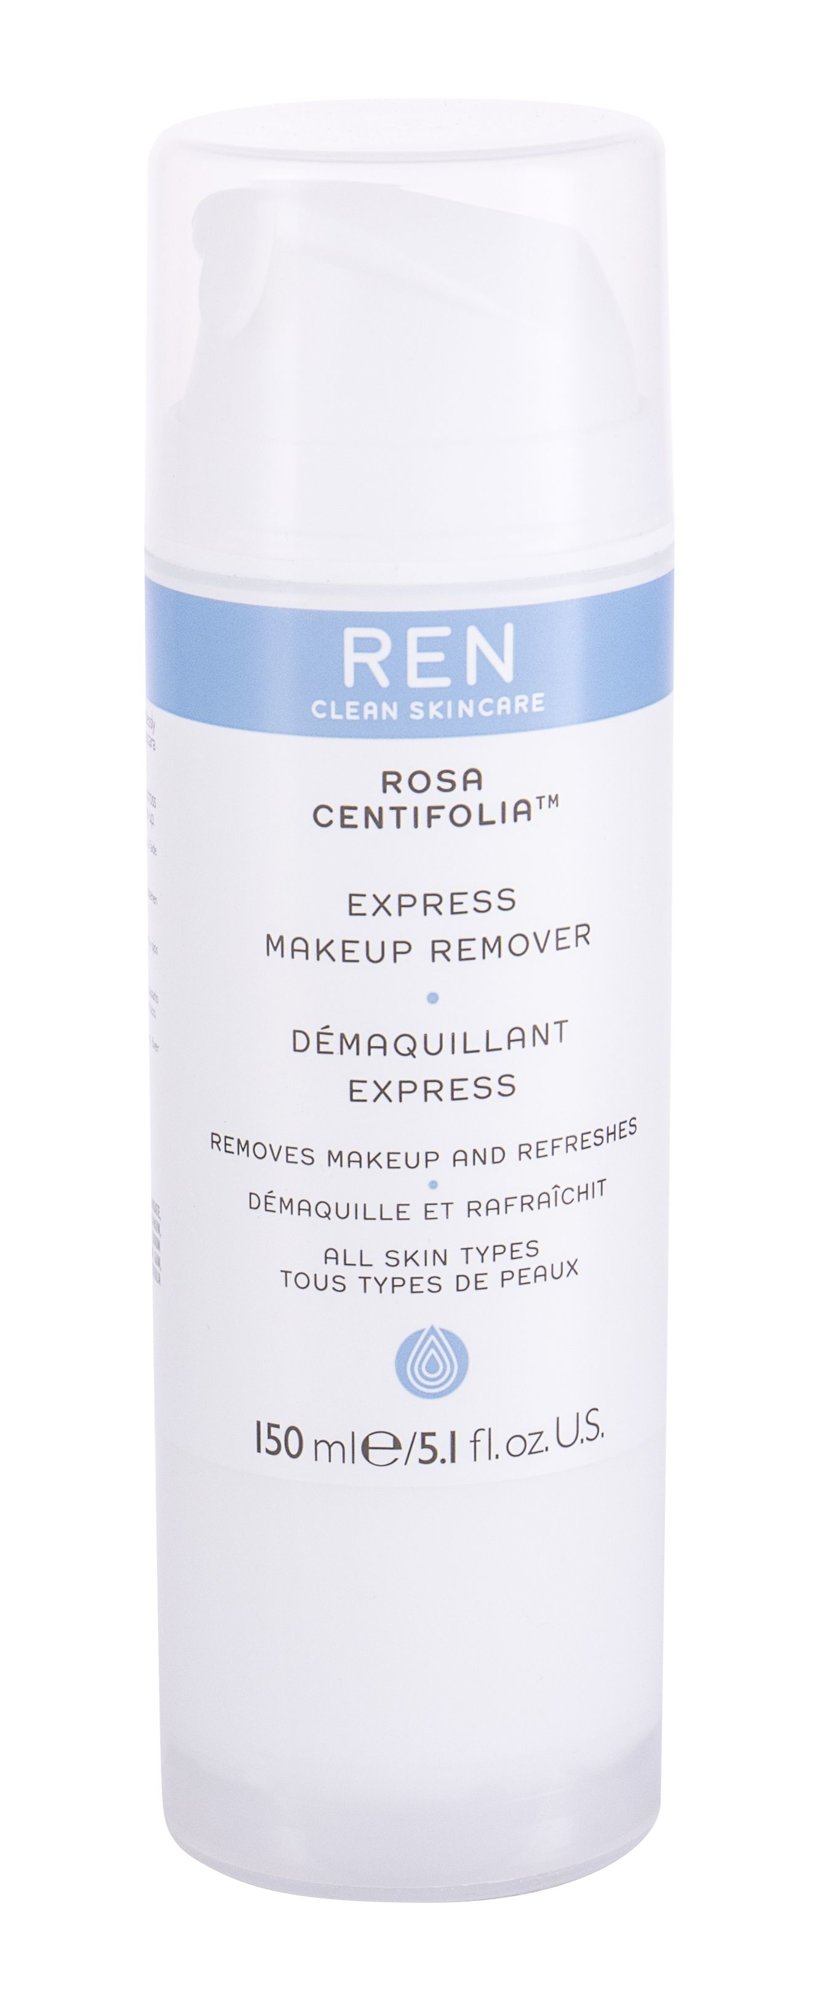 Ren Clean Skincare Rosa Centifolia Express veido valiklis